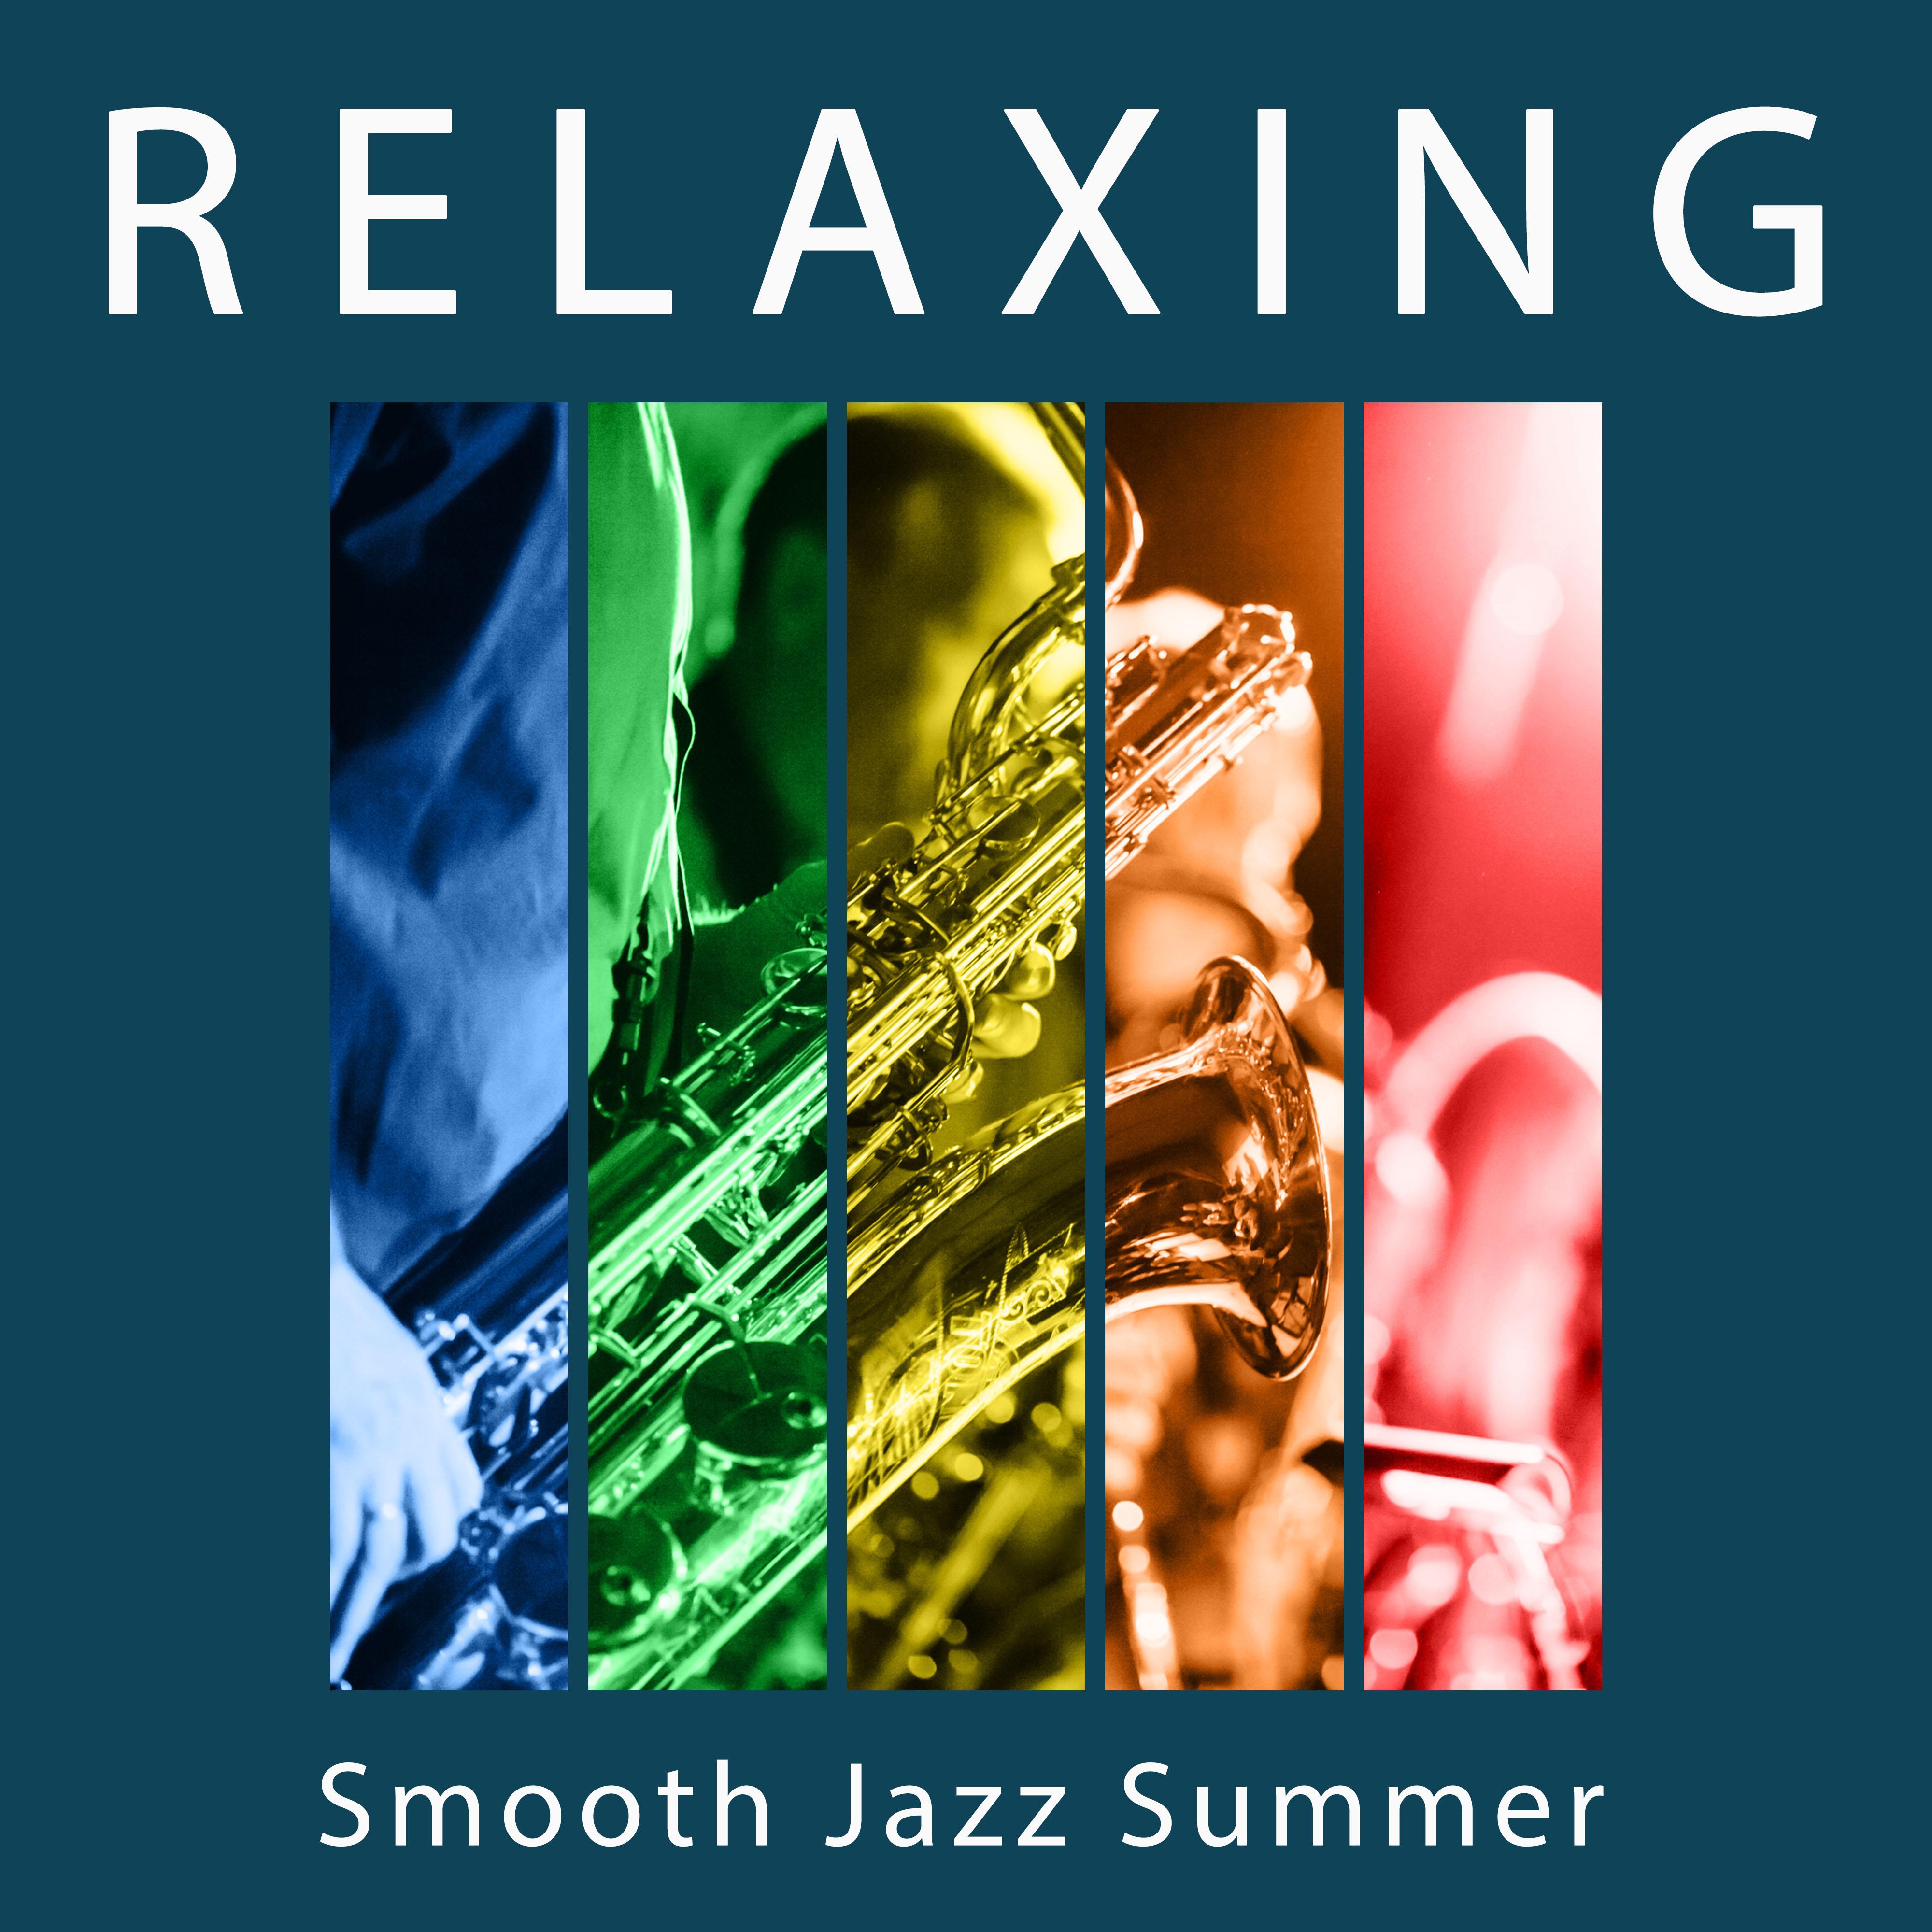 Relaxing Smooth Jazz Summer - Sensual Jazz Ambient, Drink Bar Jazz Music, Soft Piano Bar Music